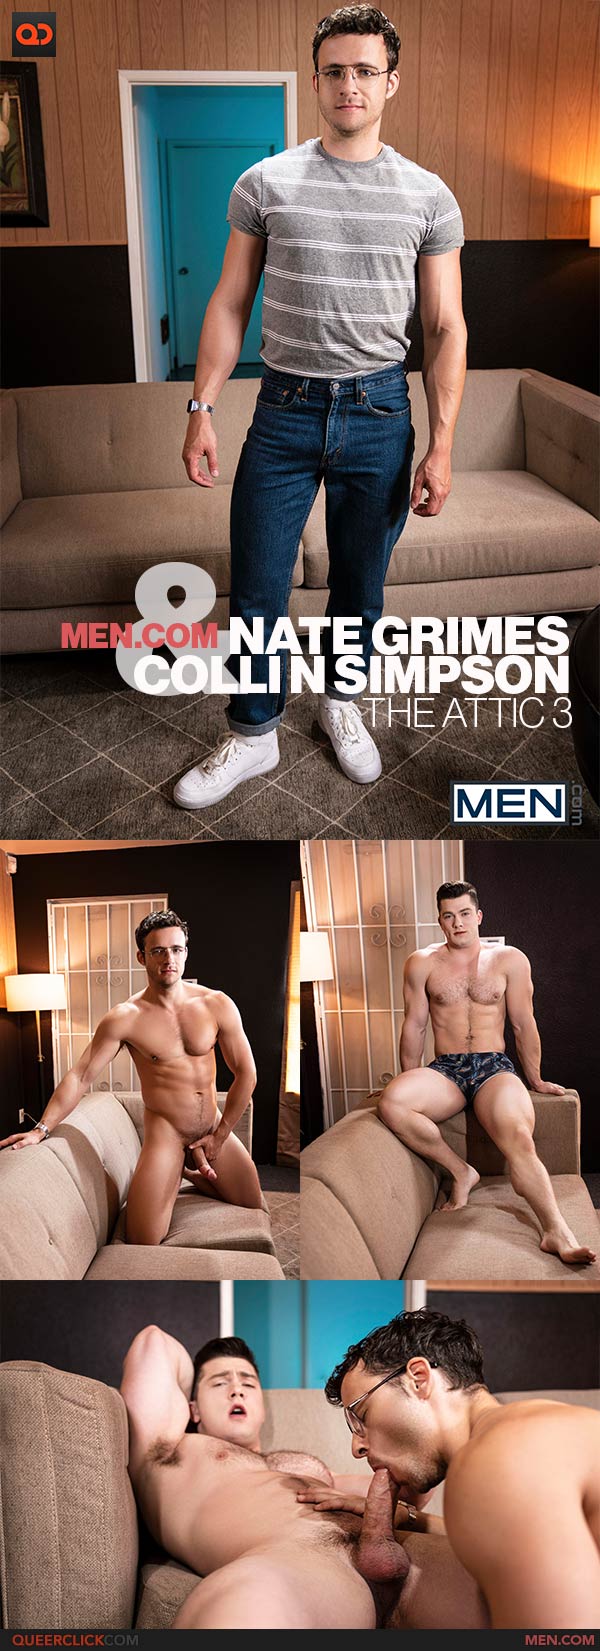 Men.com: Collin Simpson and Nate Grimes